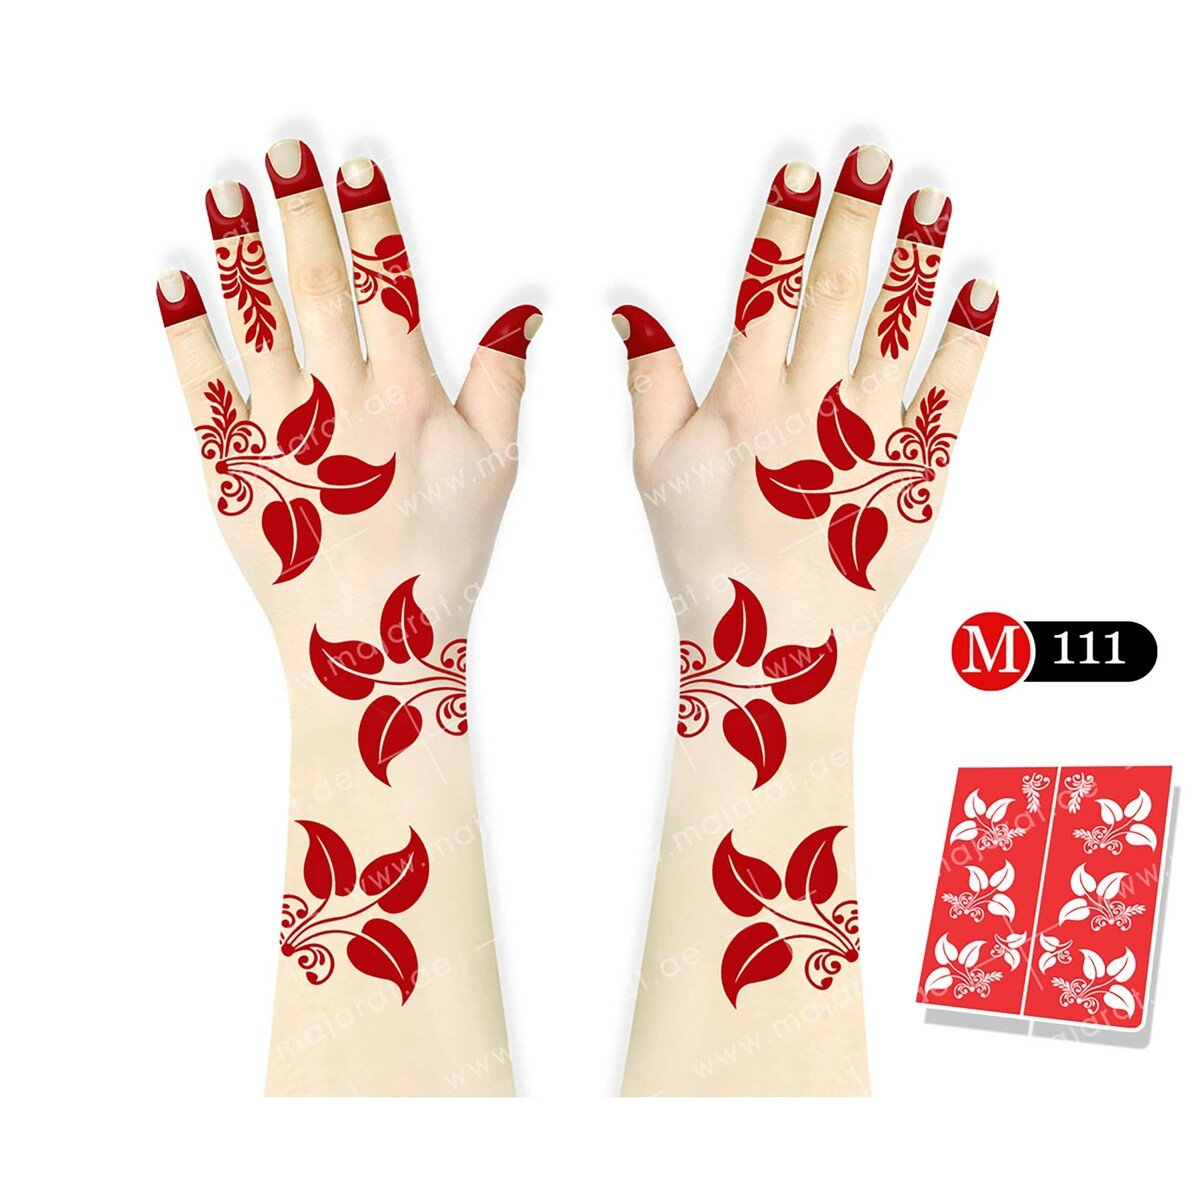 Majarat Henna Design Sticker Medium M111 18x20cm